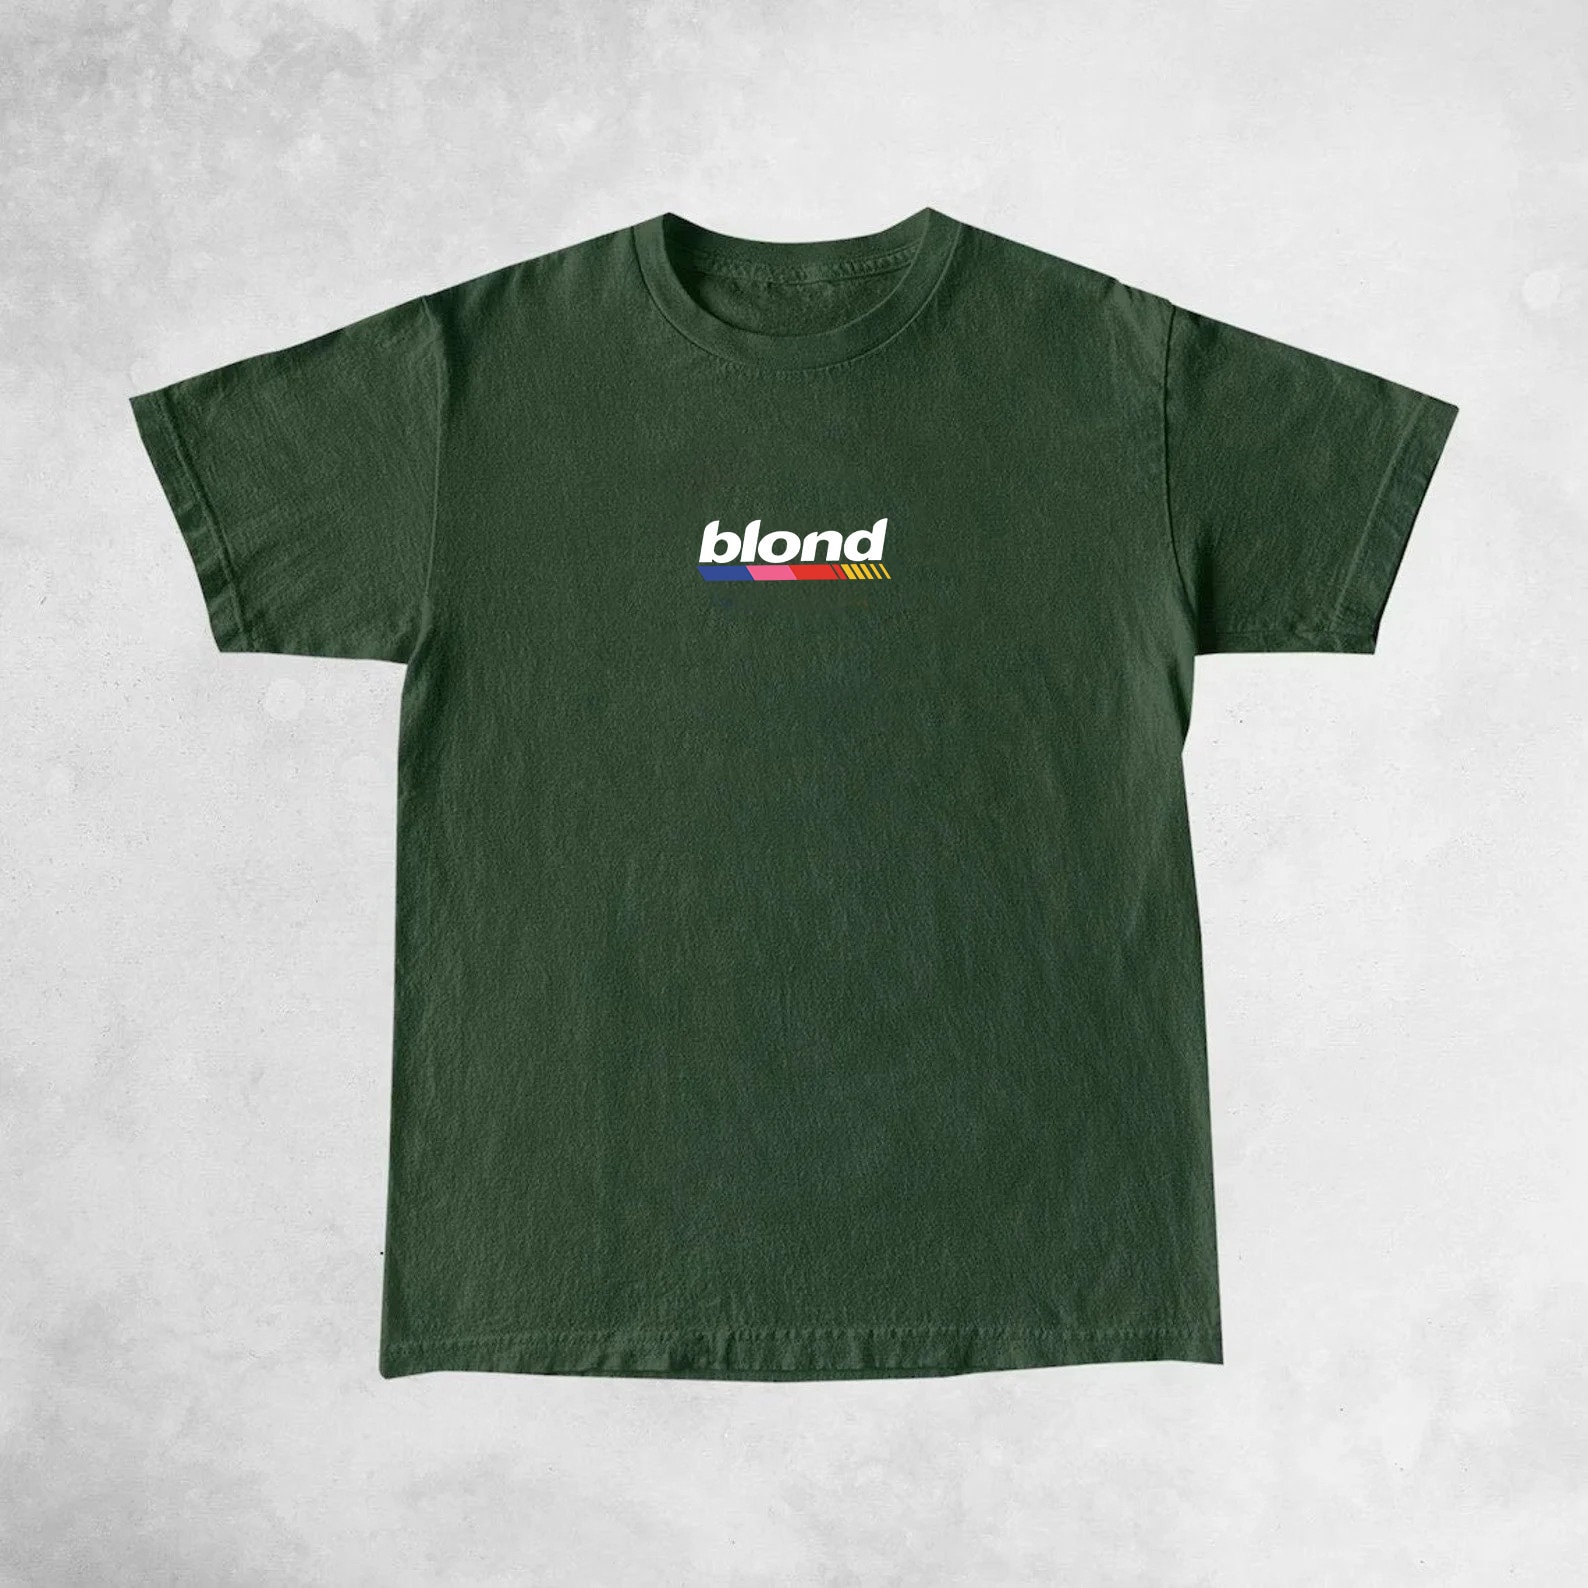 Discover Frank Blond Tshirt, Frank Blond Inspired T shirt, Frank T-shirt